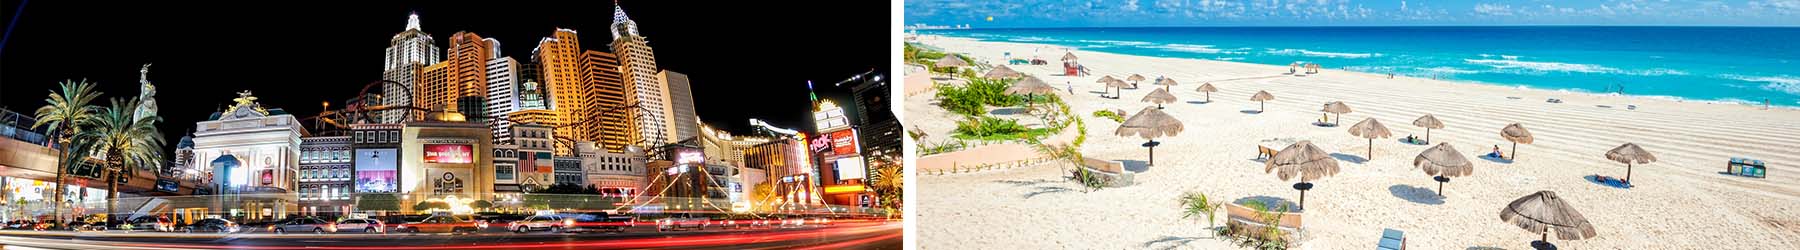 Las Vegas & Cancun - 10 Nights